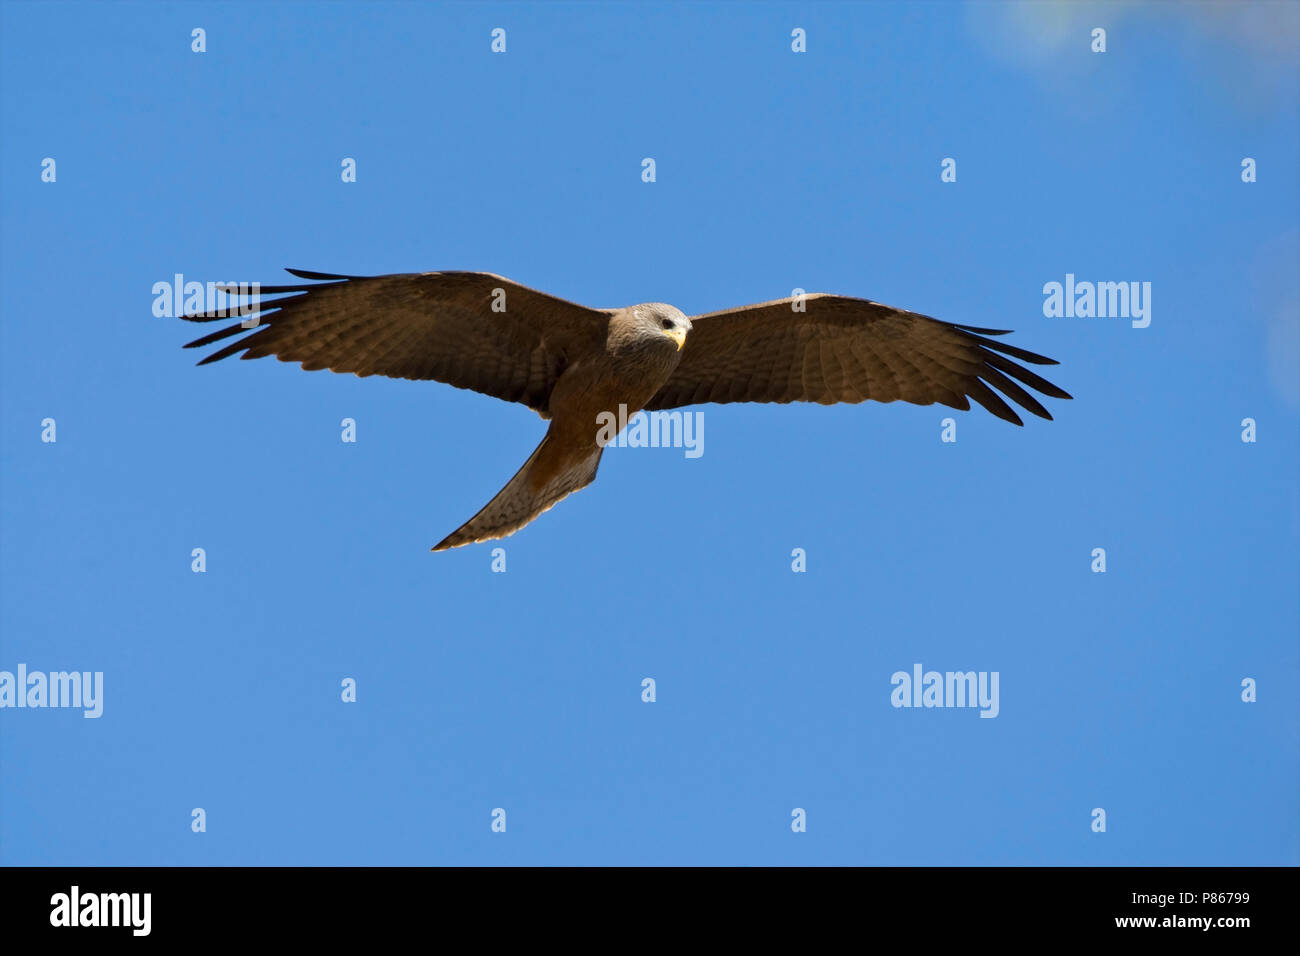 Nature stock image of Yellow-billed Kite in flight Stock Photo